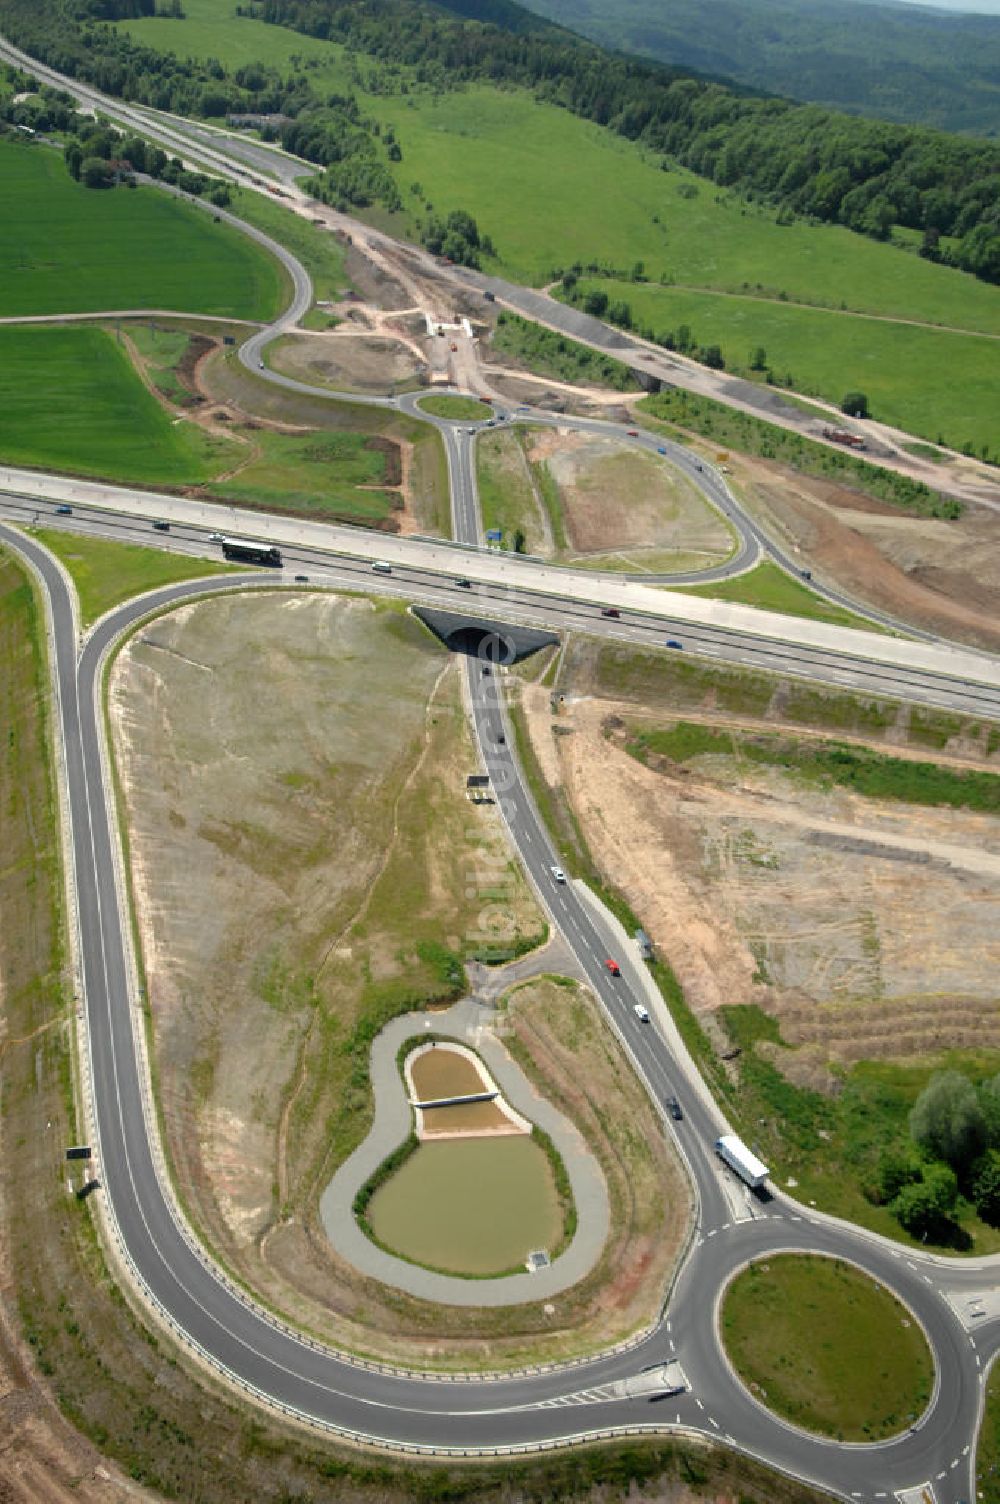 Deubachshof von oben - Neuer A4 -Autobahnverlauf bei Deubachshof - new A4 motorway course E40 / A4 near Deubachshof in thuringia